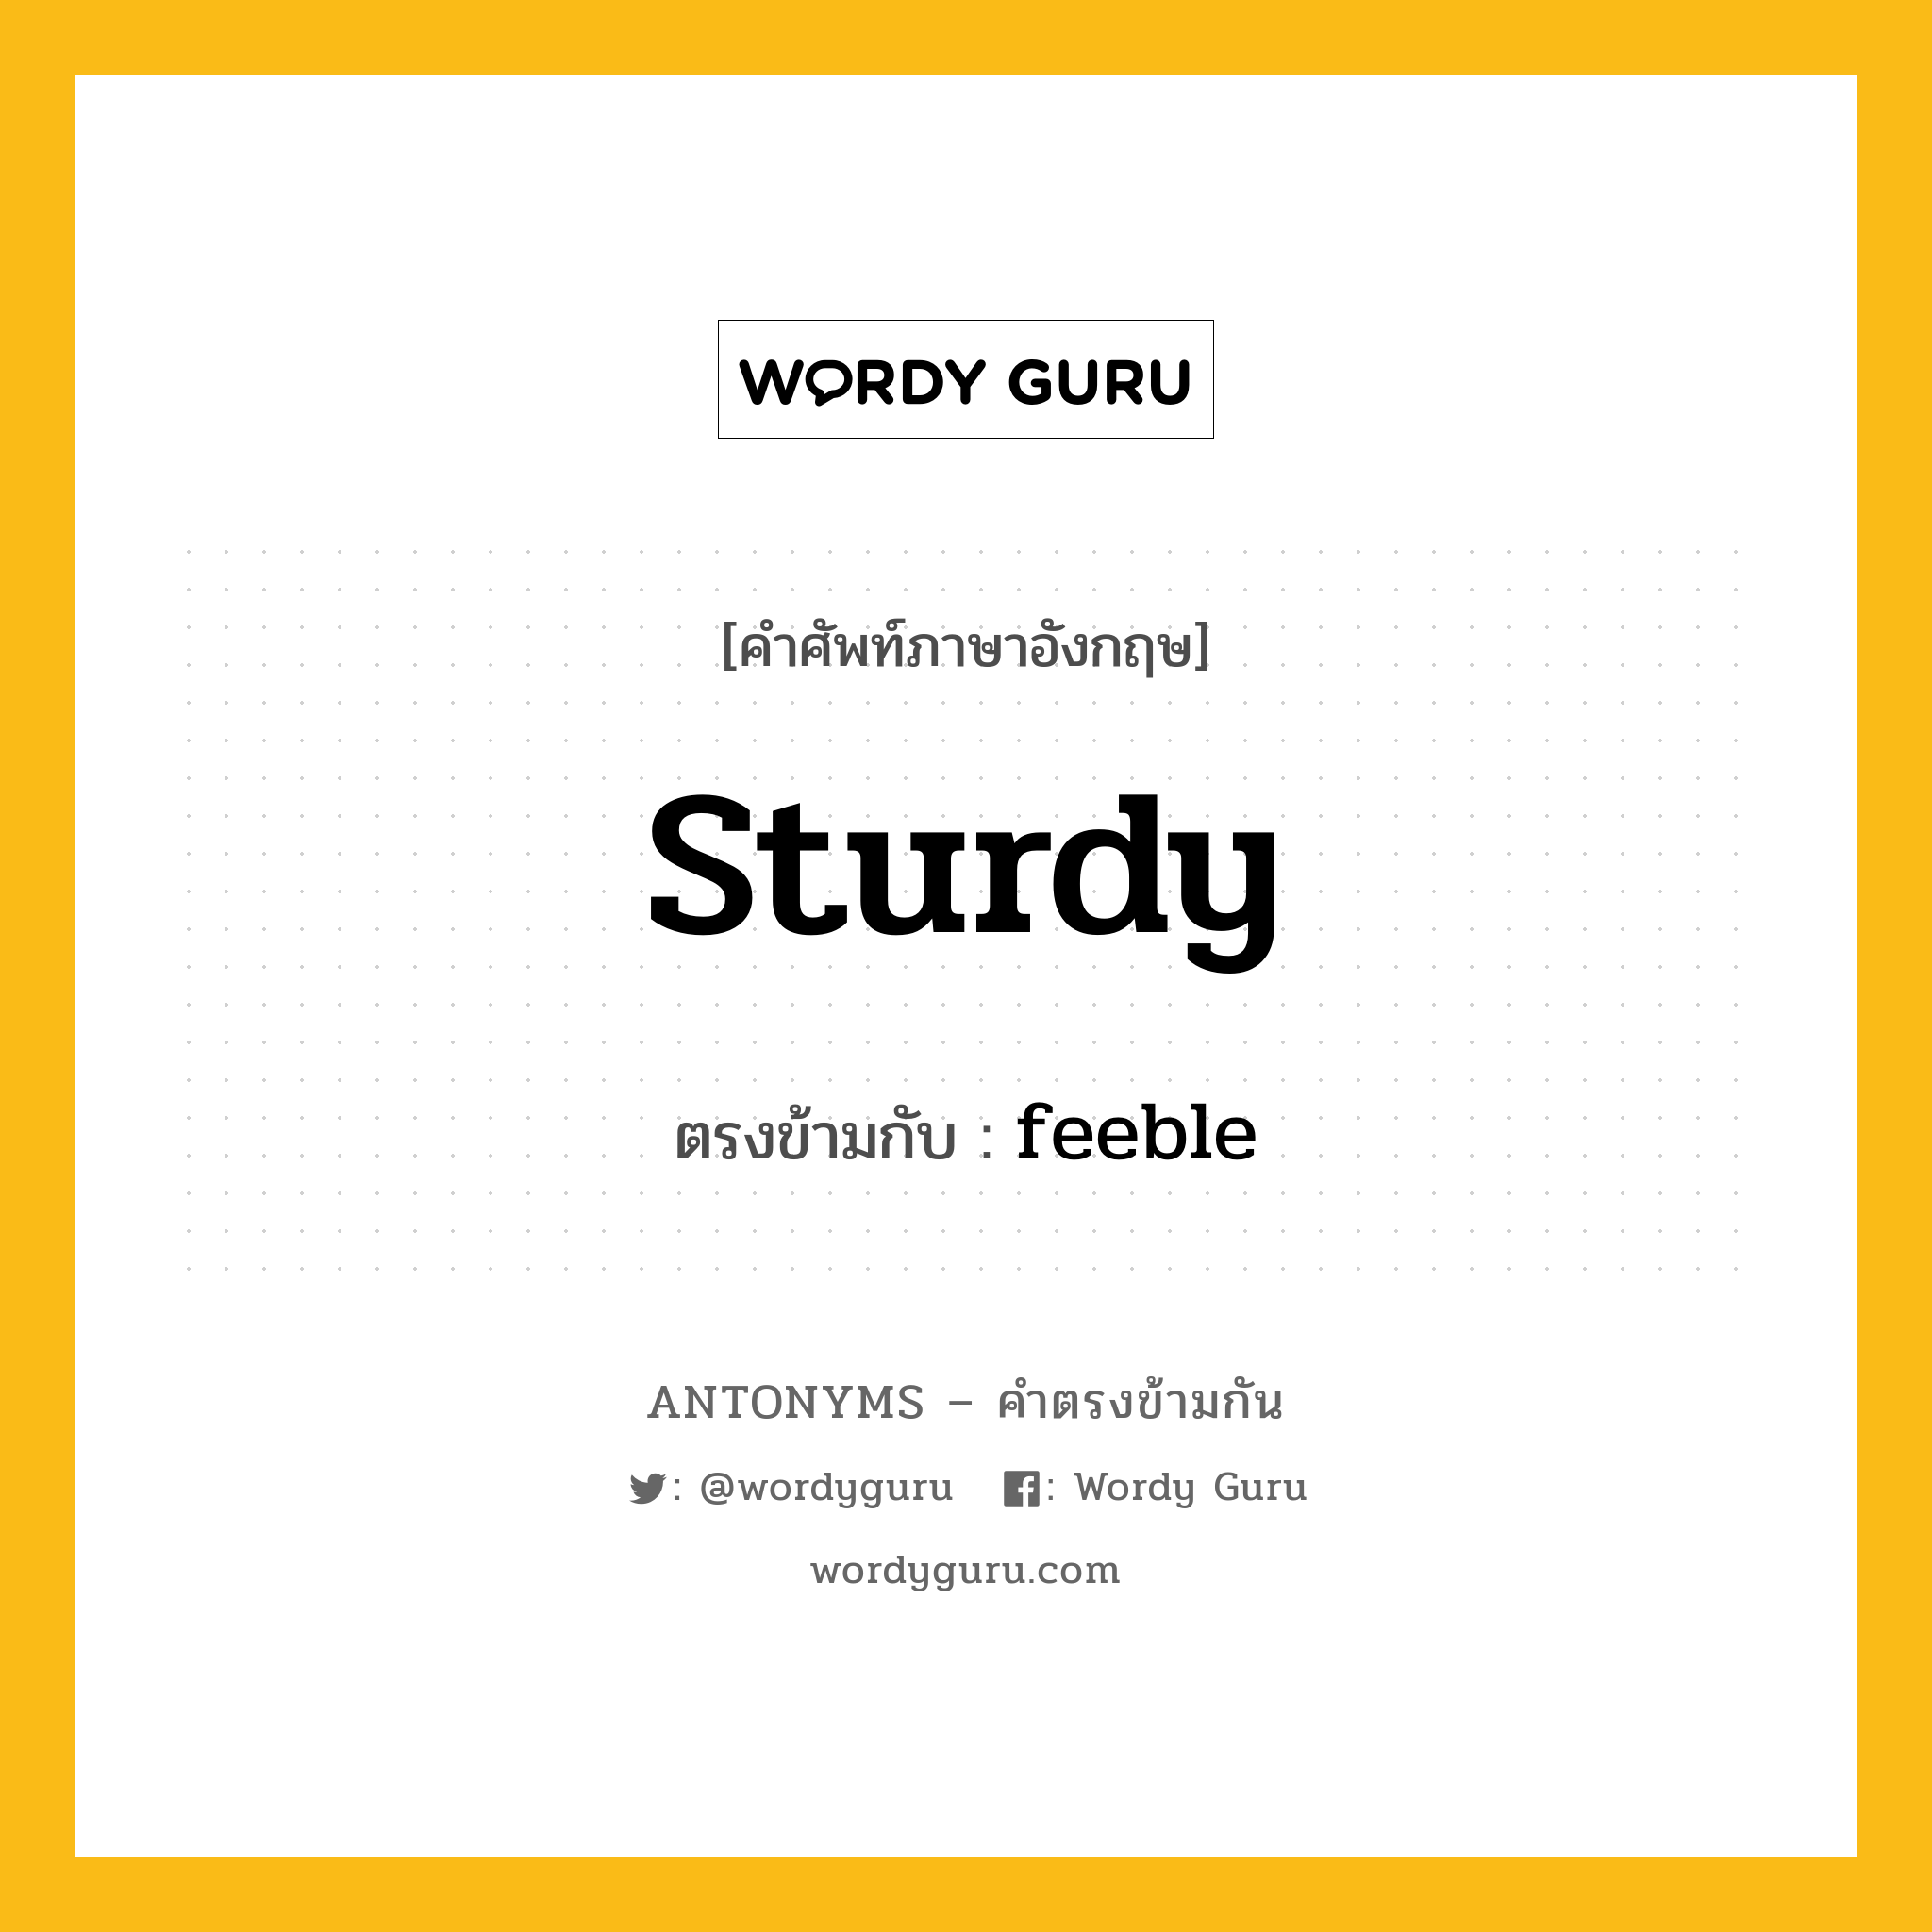 sturdy เป็นคำตรงข้ามกับคำไหนบ้าง?, คำศัพท์ภาษาอังกฤษ sturdy ตรงข้ามกับ feeble หมวด feeble